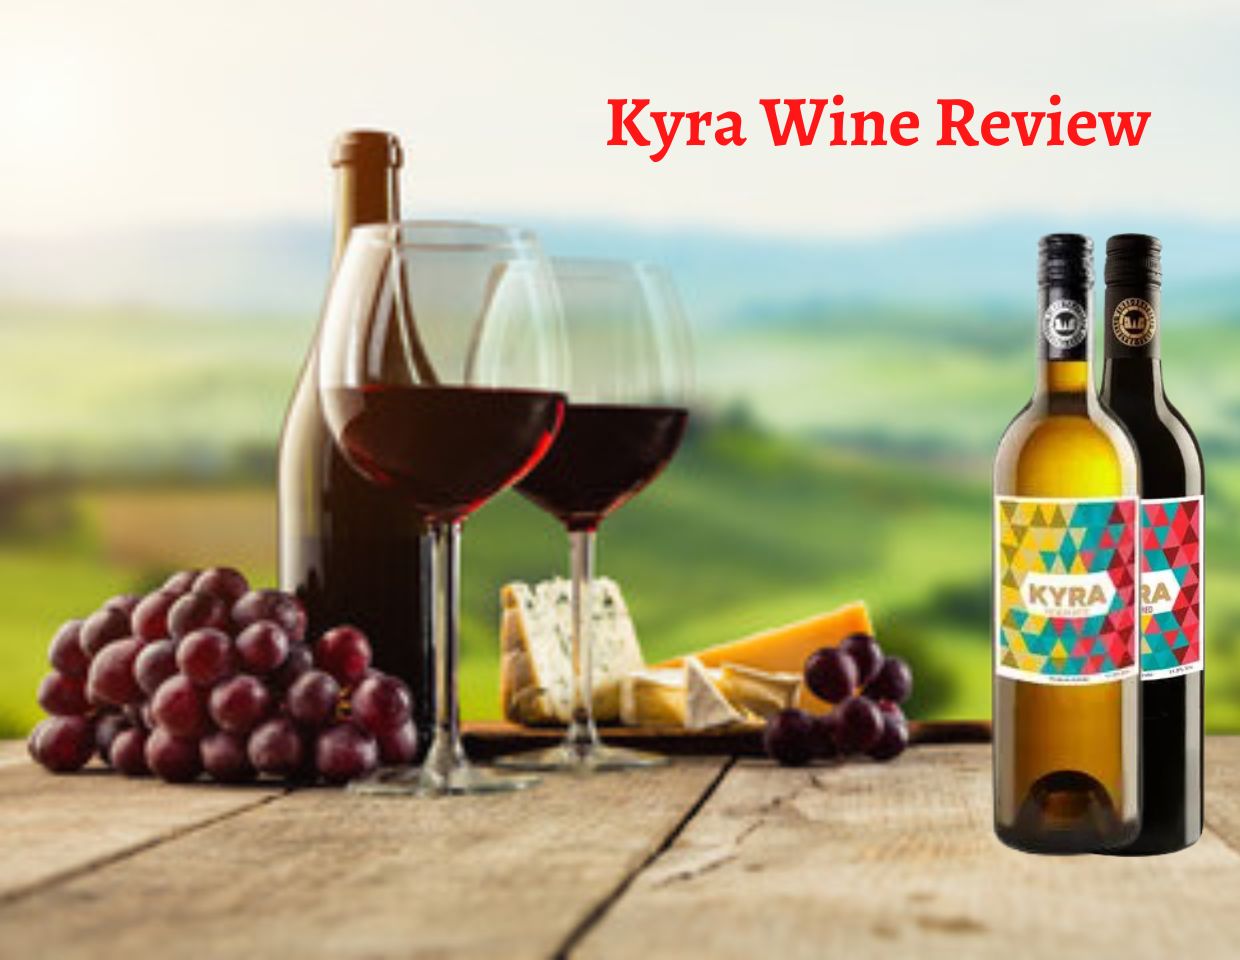 Kyra Wine review price detail information